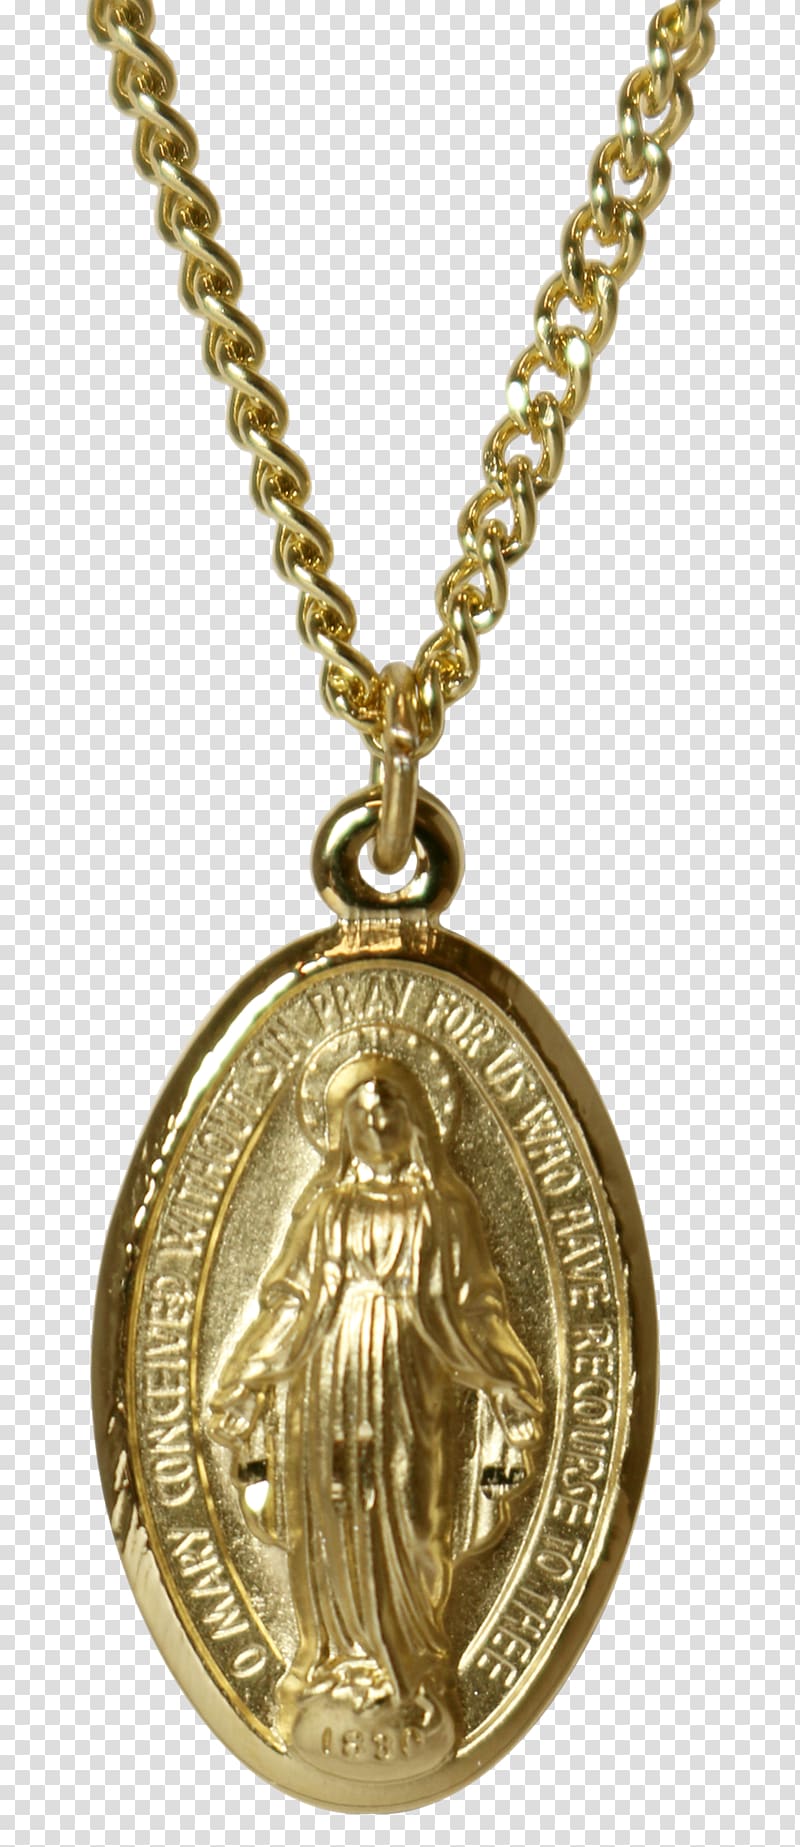 Association-Miraculous Medal Gold medal Saint Benedict Medal, medal transparent background PNG clipart